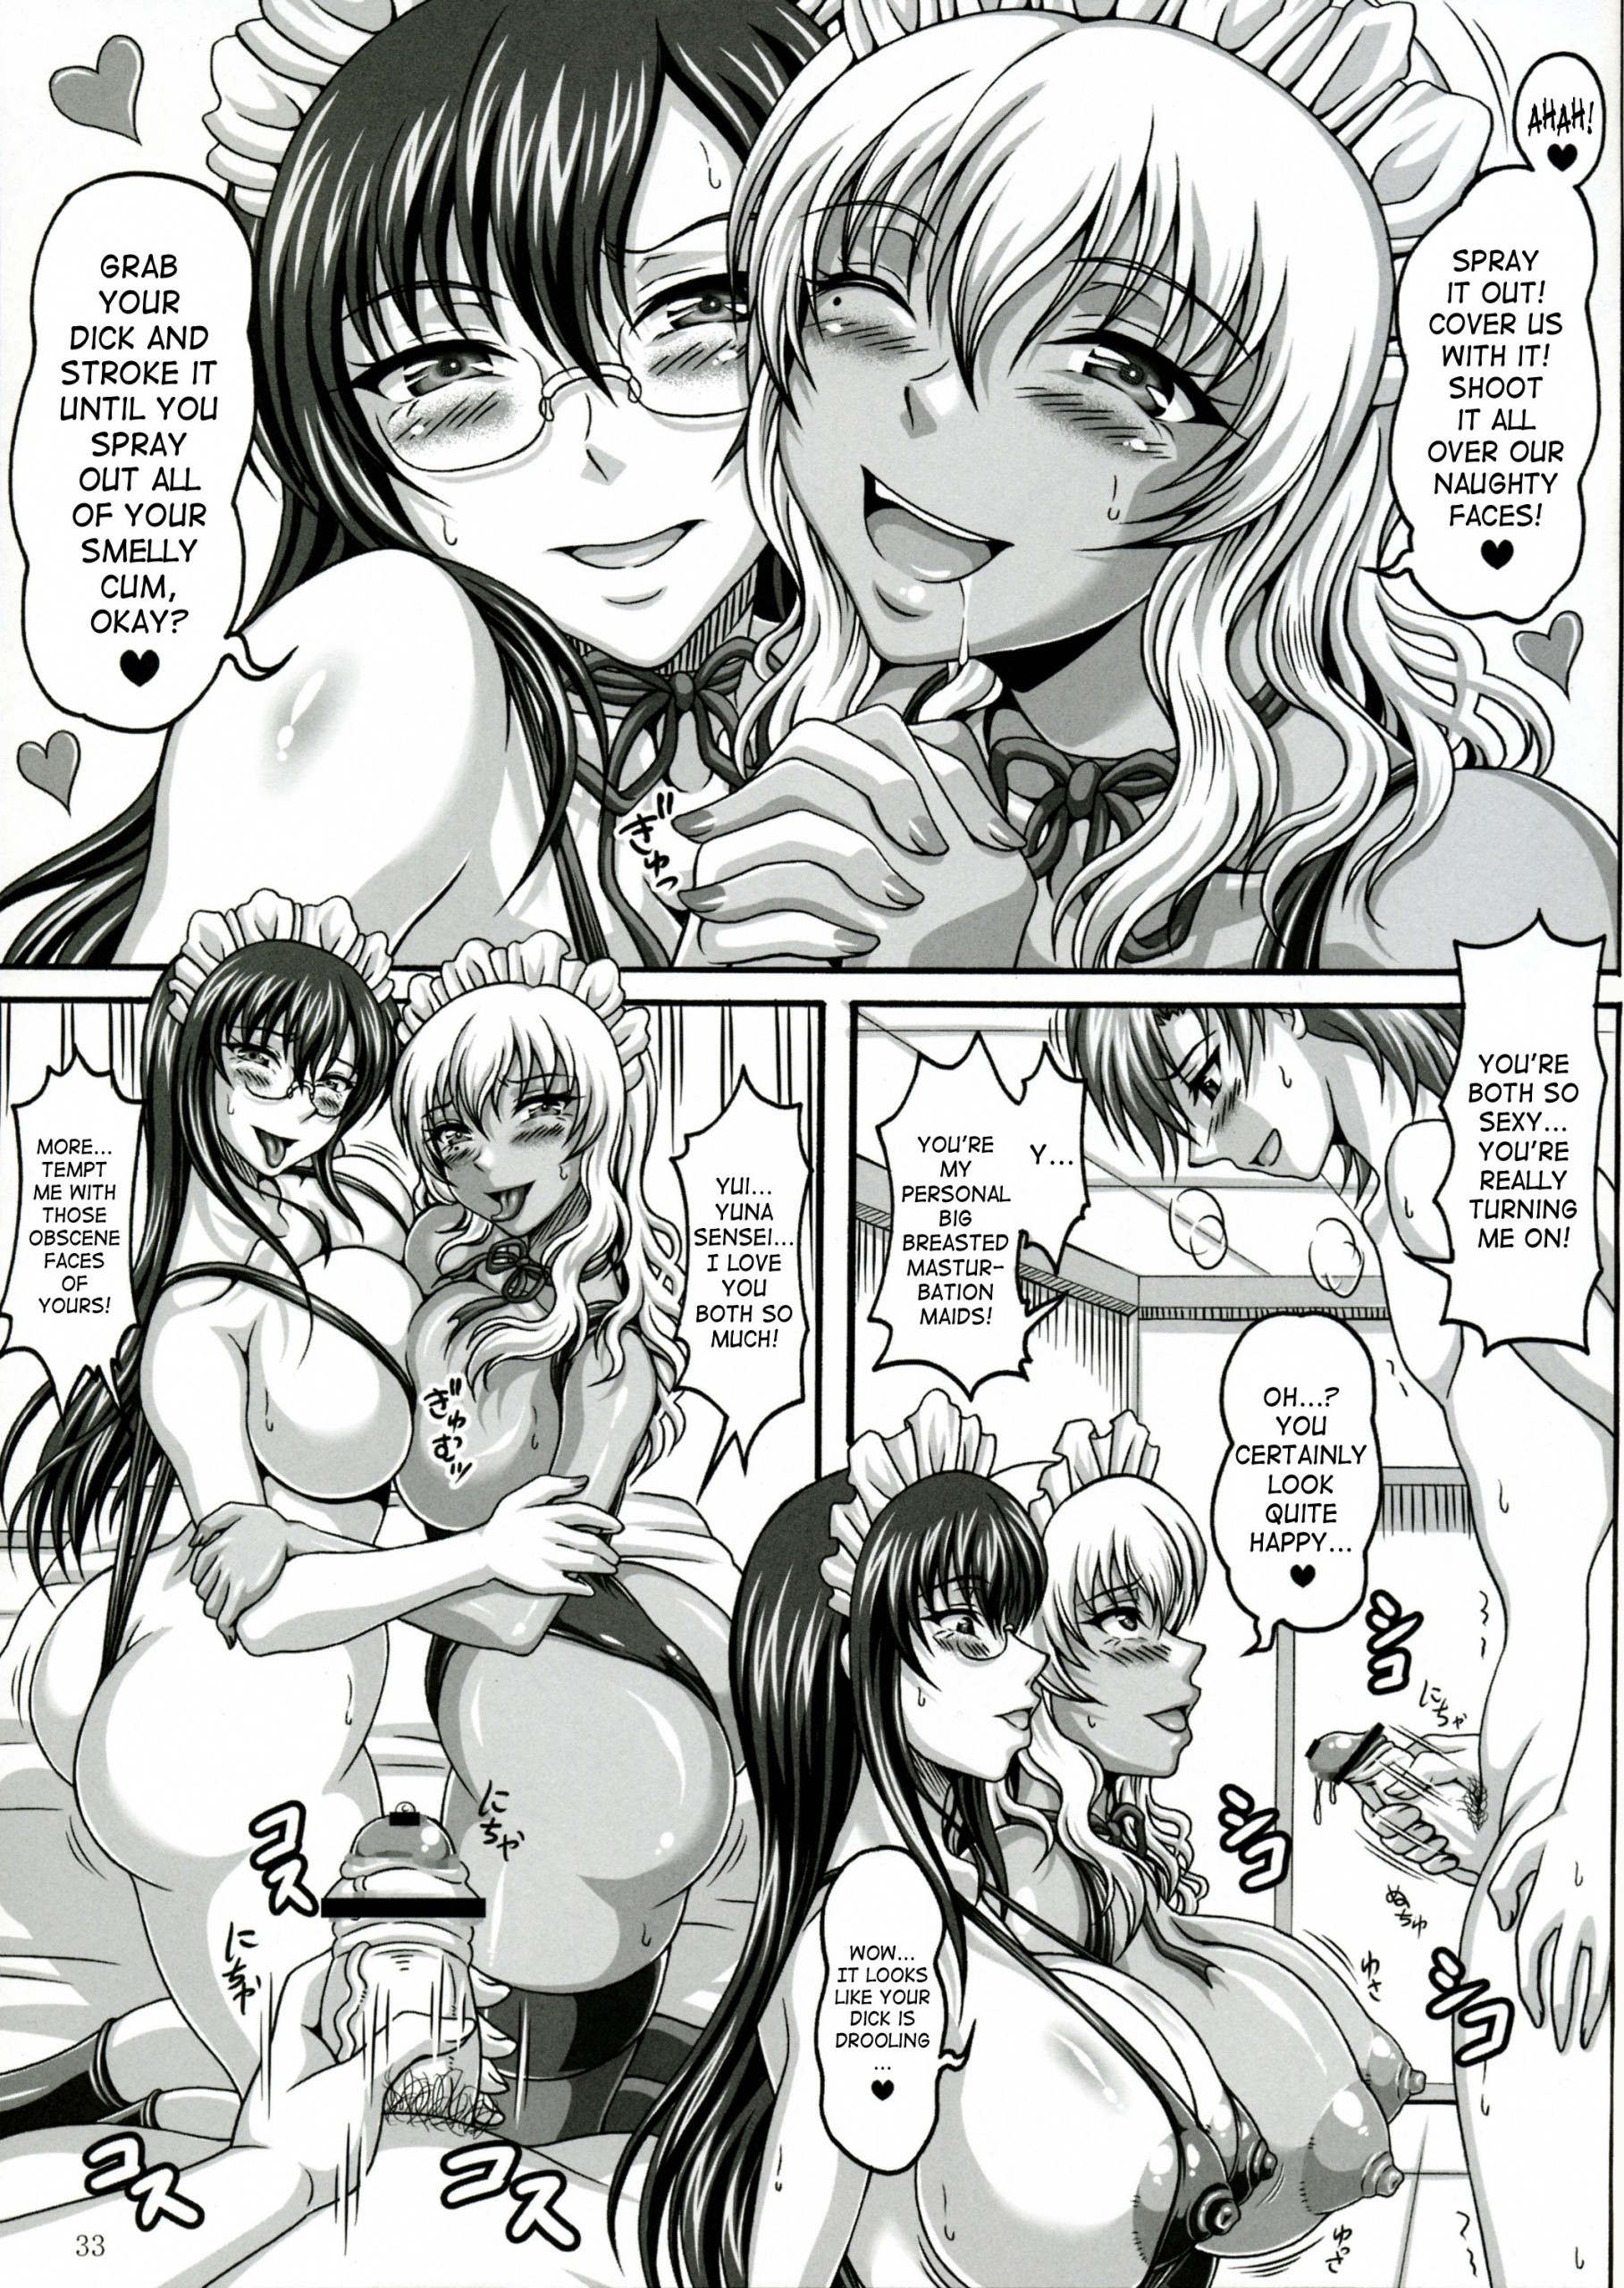 My Personal Big Breasted Masturbation Maid X2 hentai manga picture 30